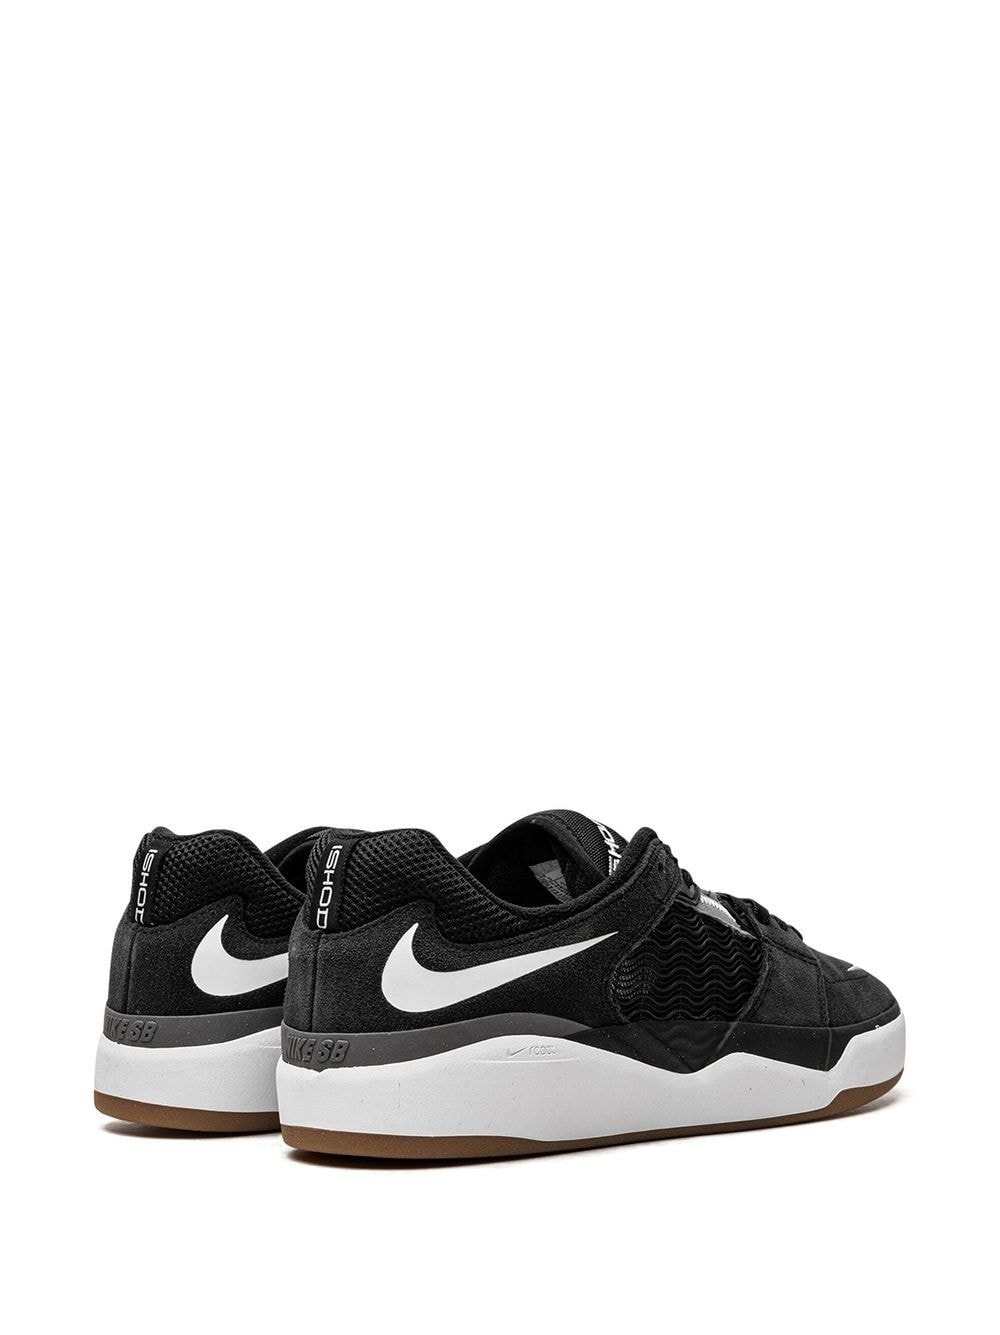 SB Ishod Wair "Black/White" sneakers - 3